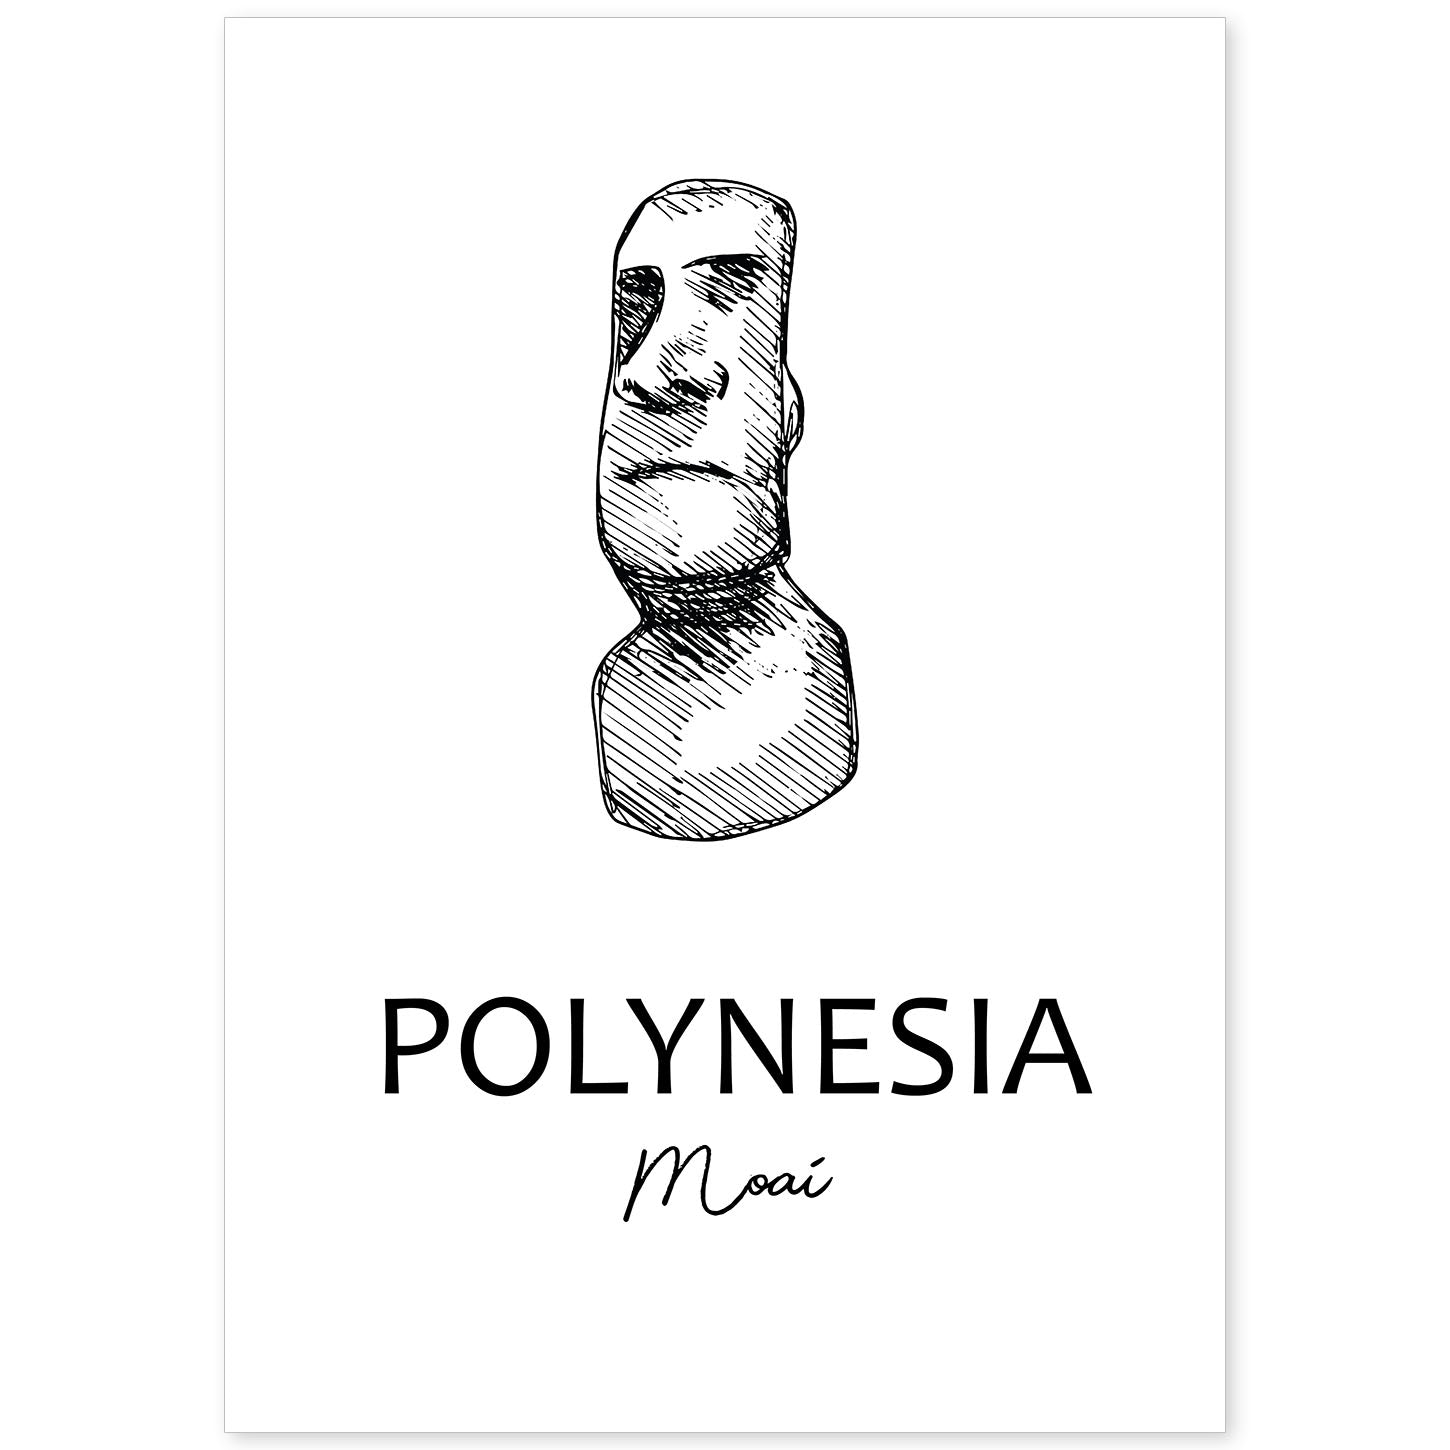 Poster de Polinesia - Moai. Láminas con monumentos de ciudades.-Artwork-Nacnic-A4-Sin marco-Nacnic Estudio SL